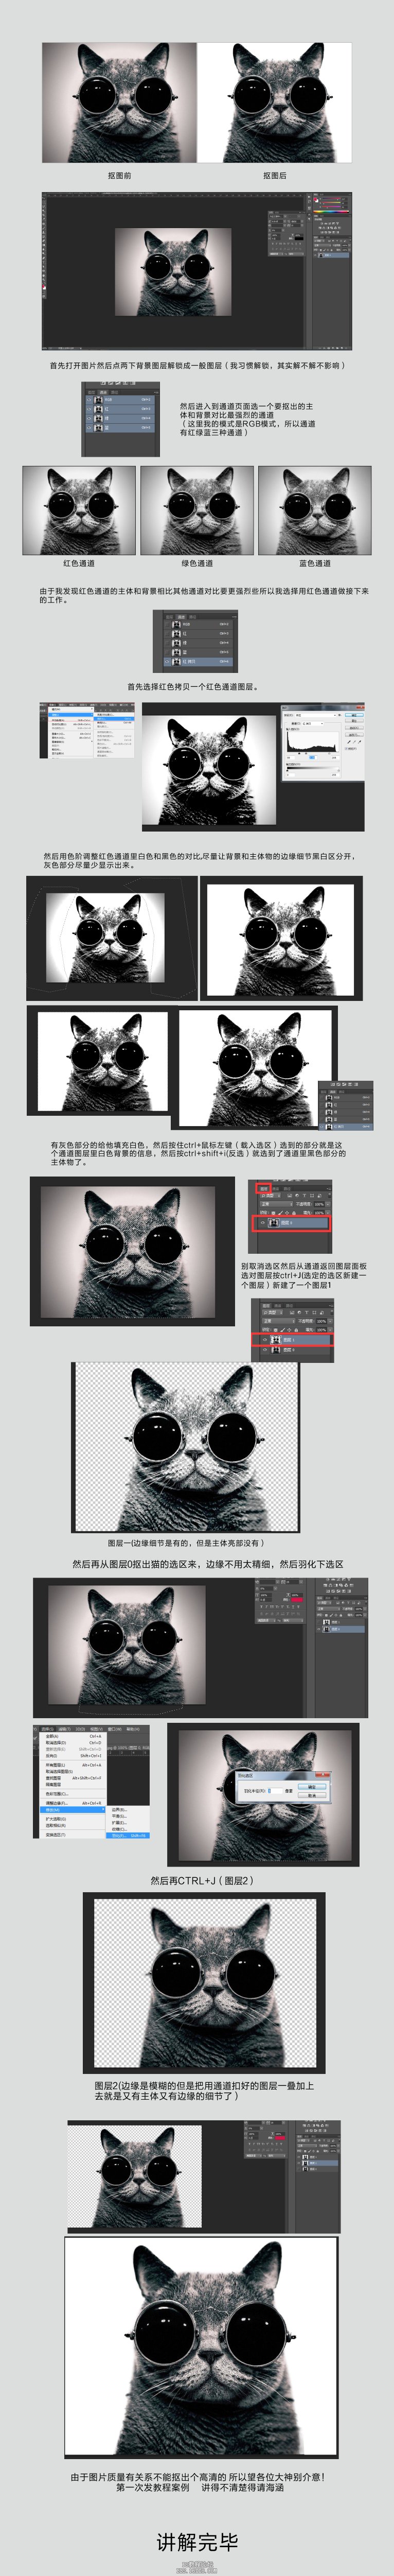 CC通道抠图，利用通道抠出眼镜猫图片。